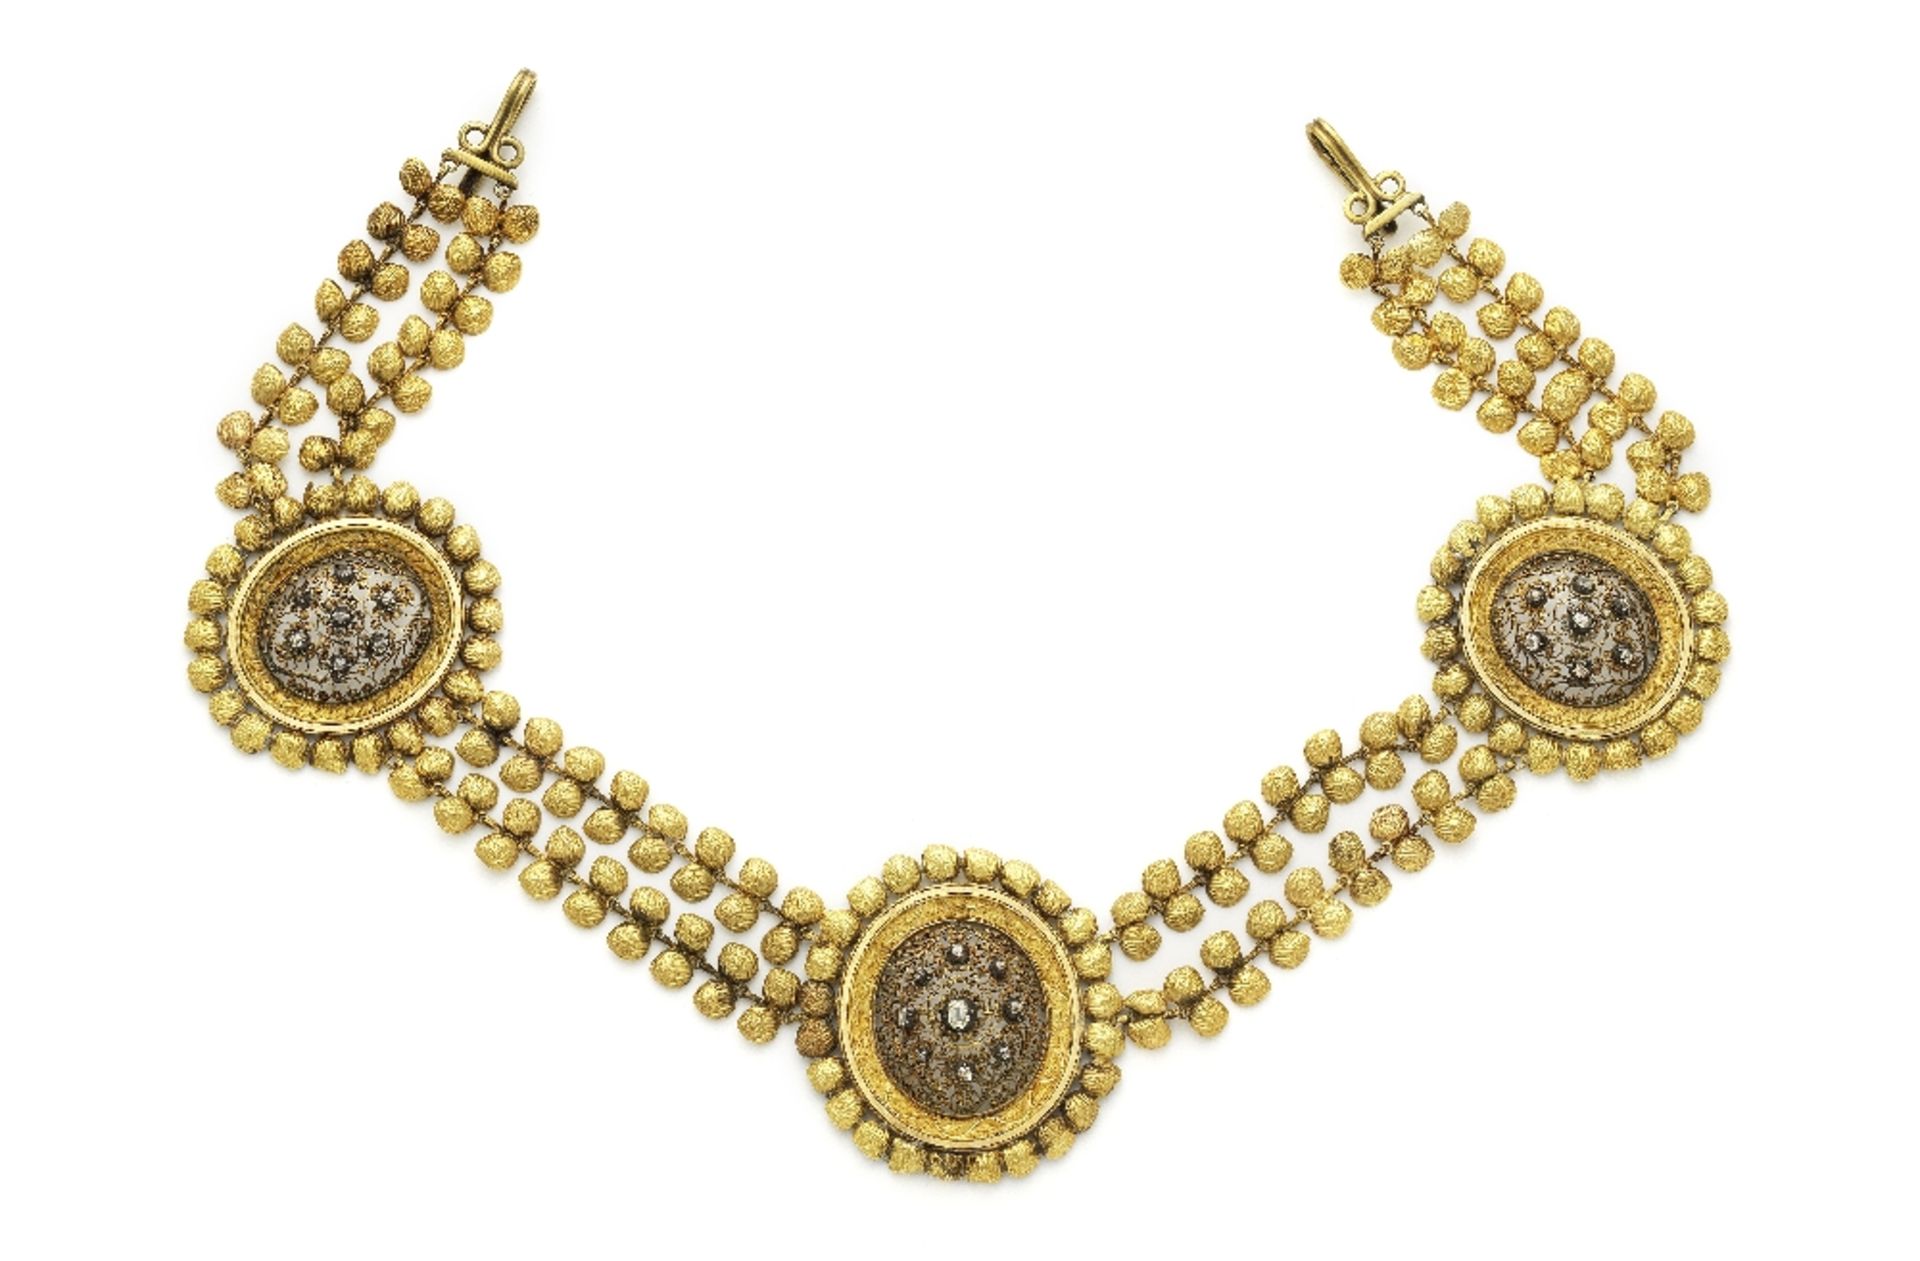 An impressive diamond-set gold necklace Indonesia, probably Jakarta, late 19th Century